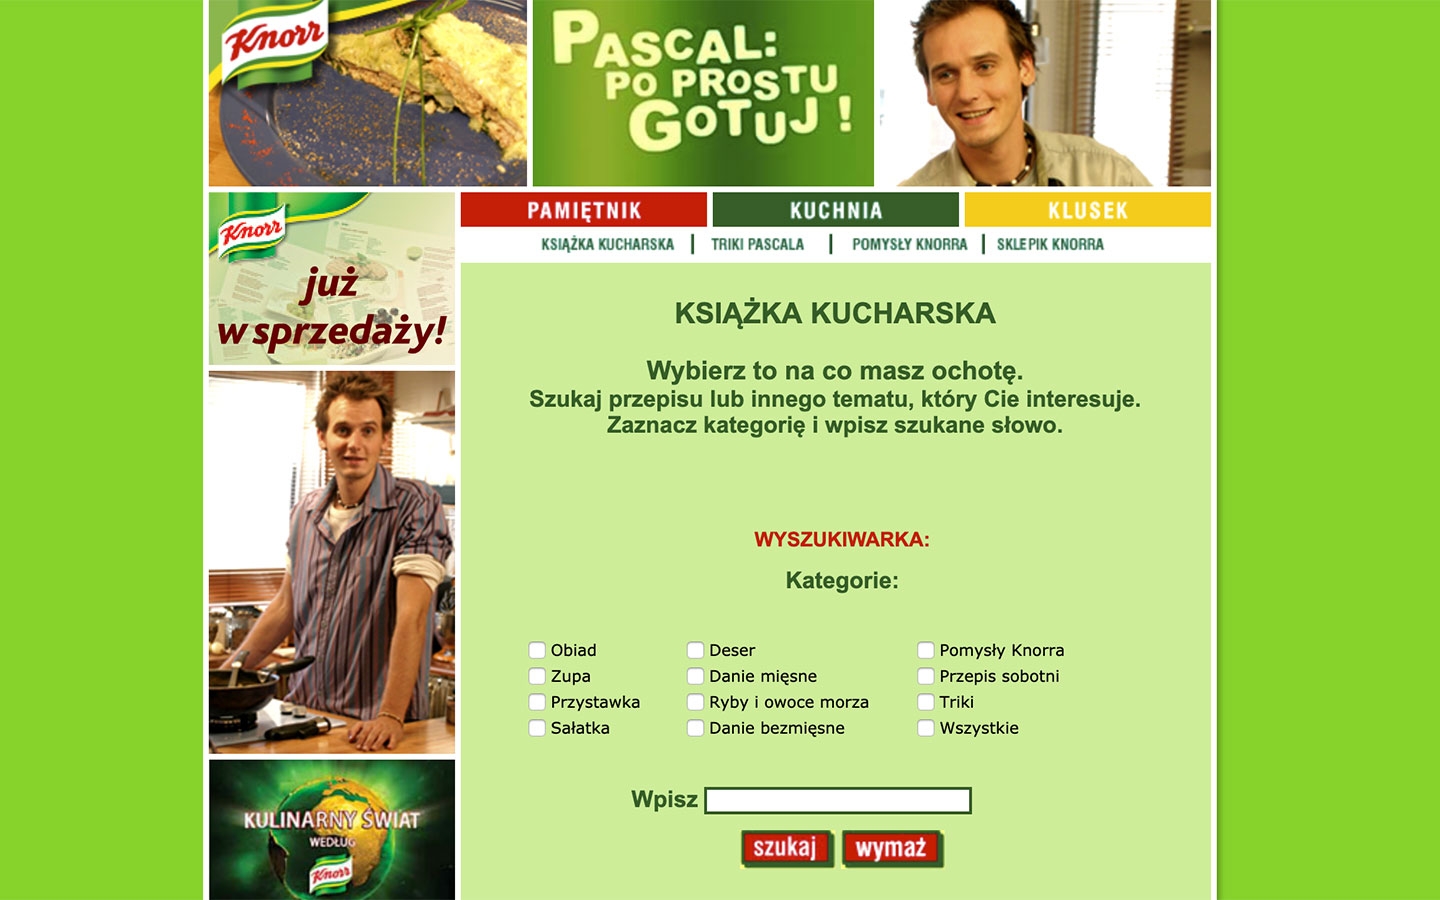 Pascal: Po Prostu Gotuj! | poprostugotuj.onet.pl | 2004 (Screen Only 06) © echonet communication